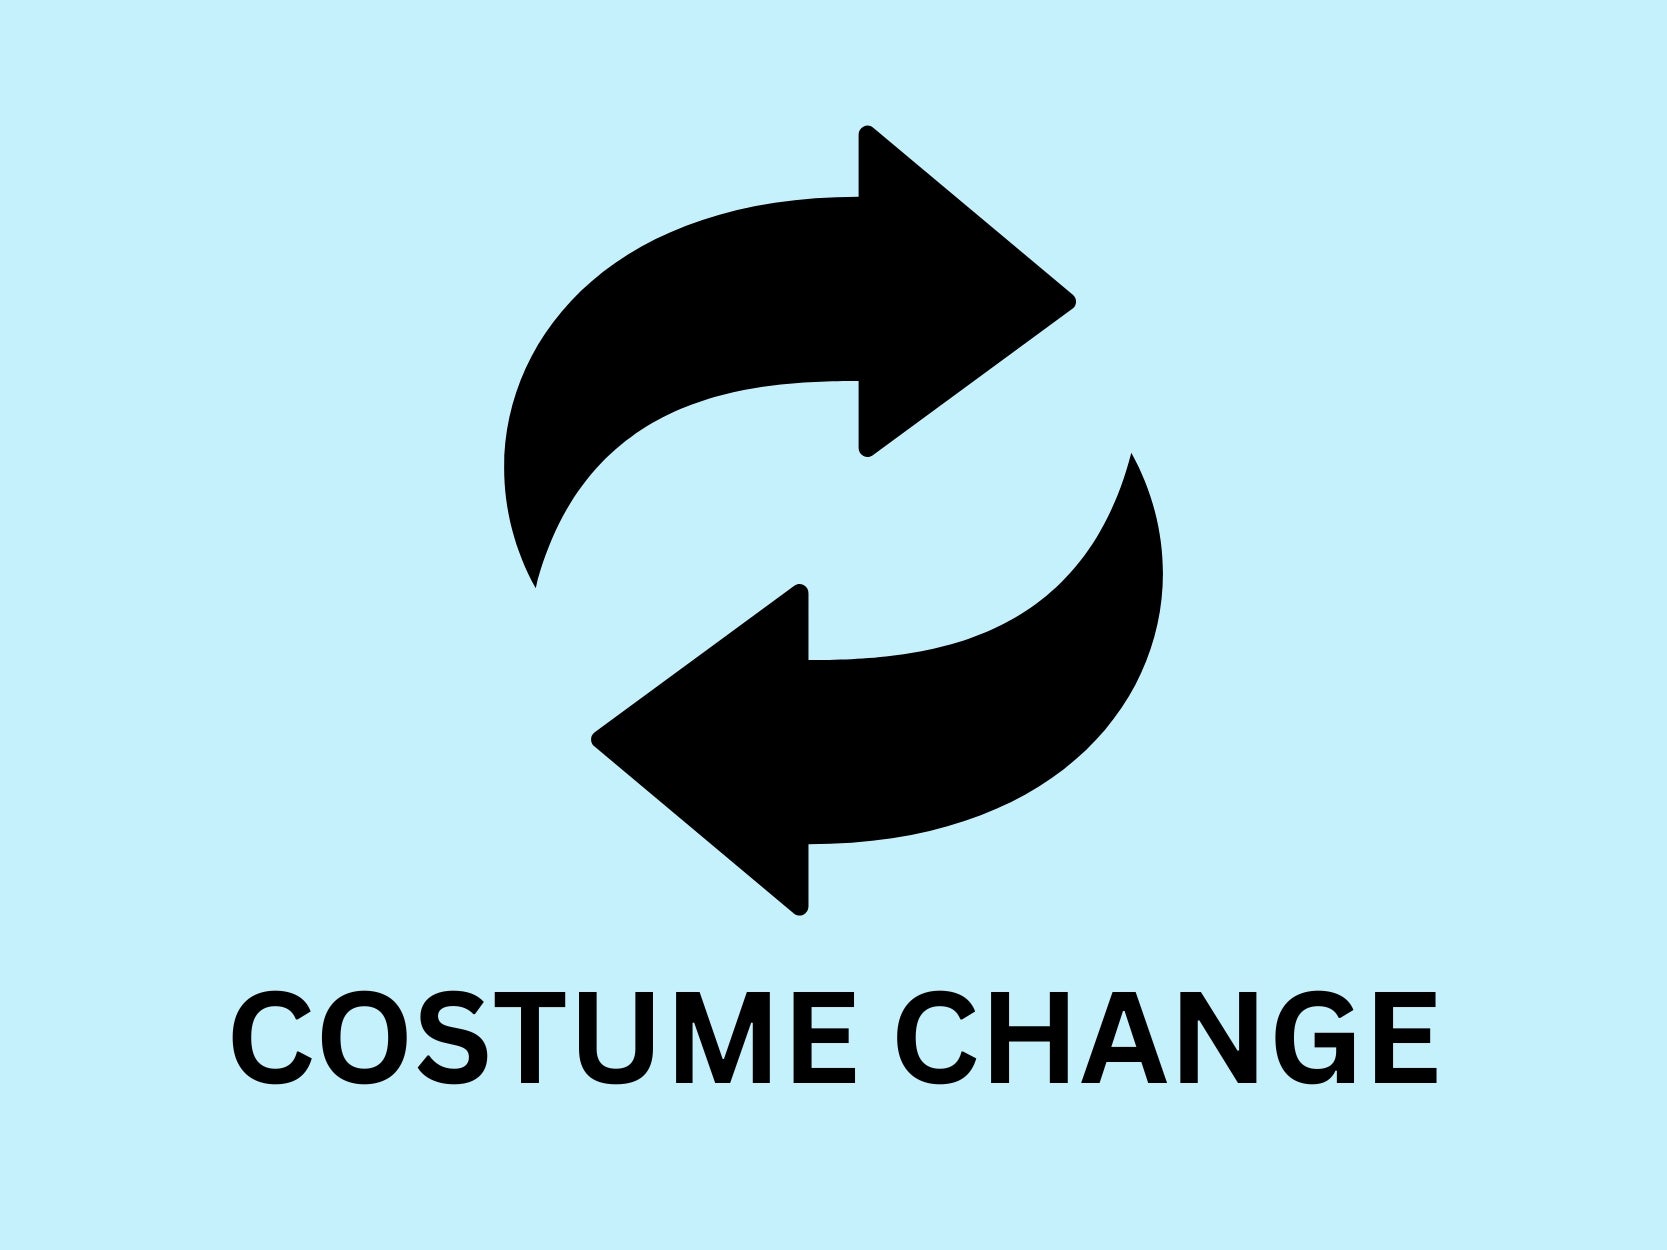 Costume change